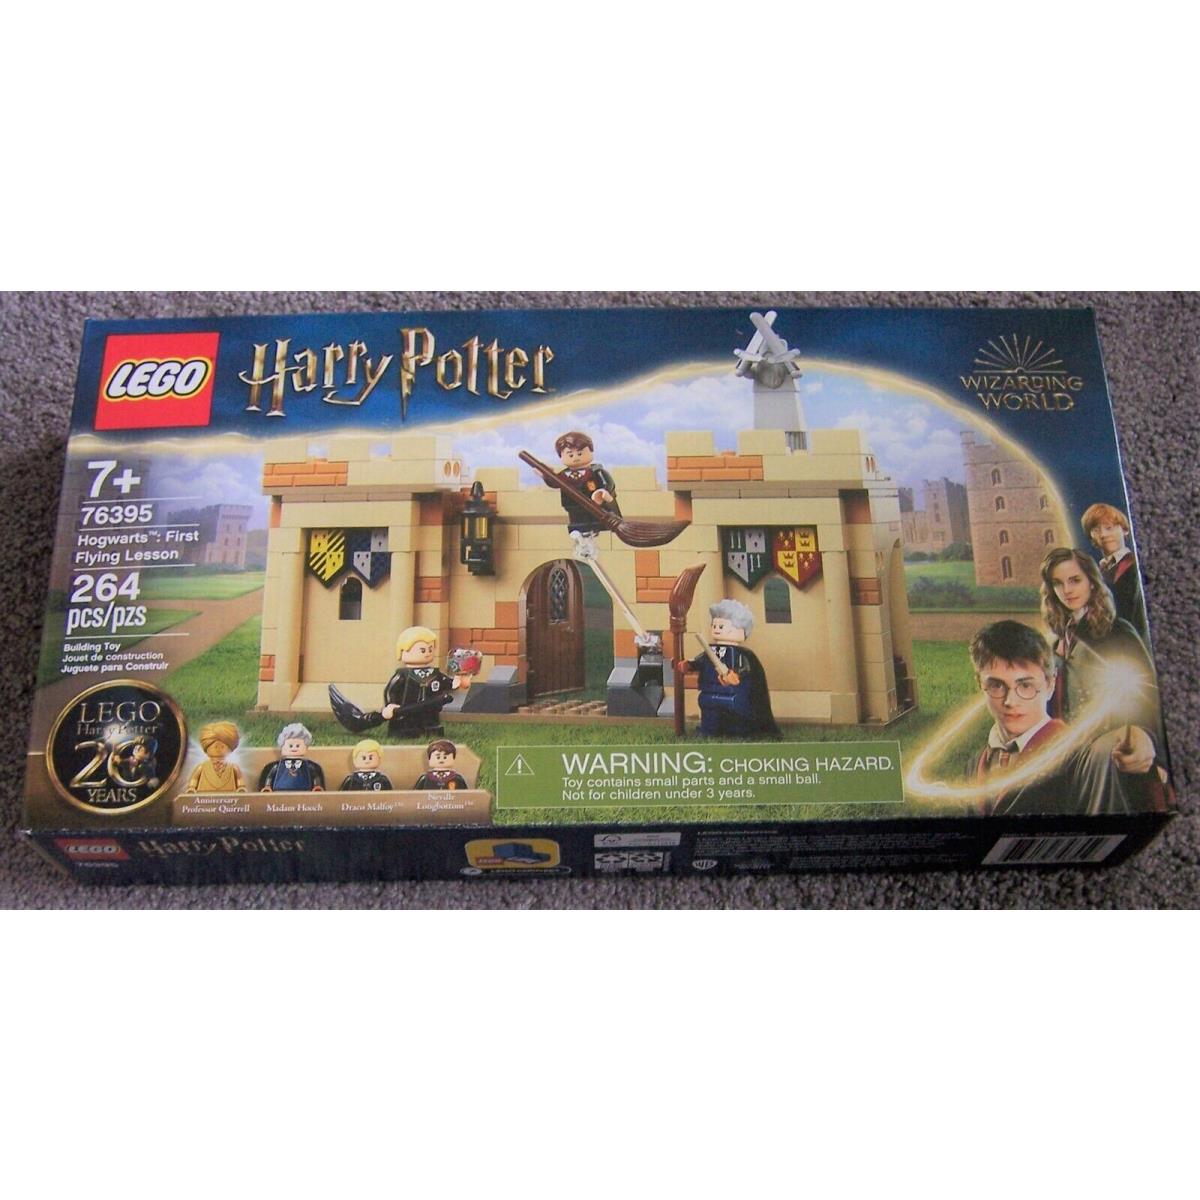 Lego Harry Potter Hogwarts First Flying Lesson 76395 Building Set Draco